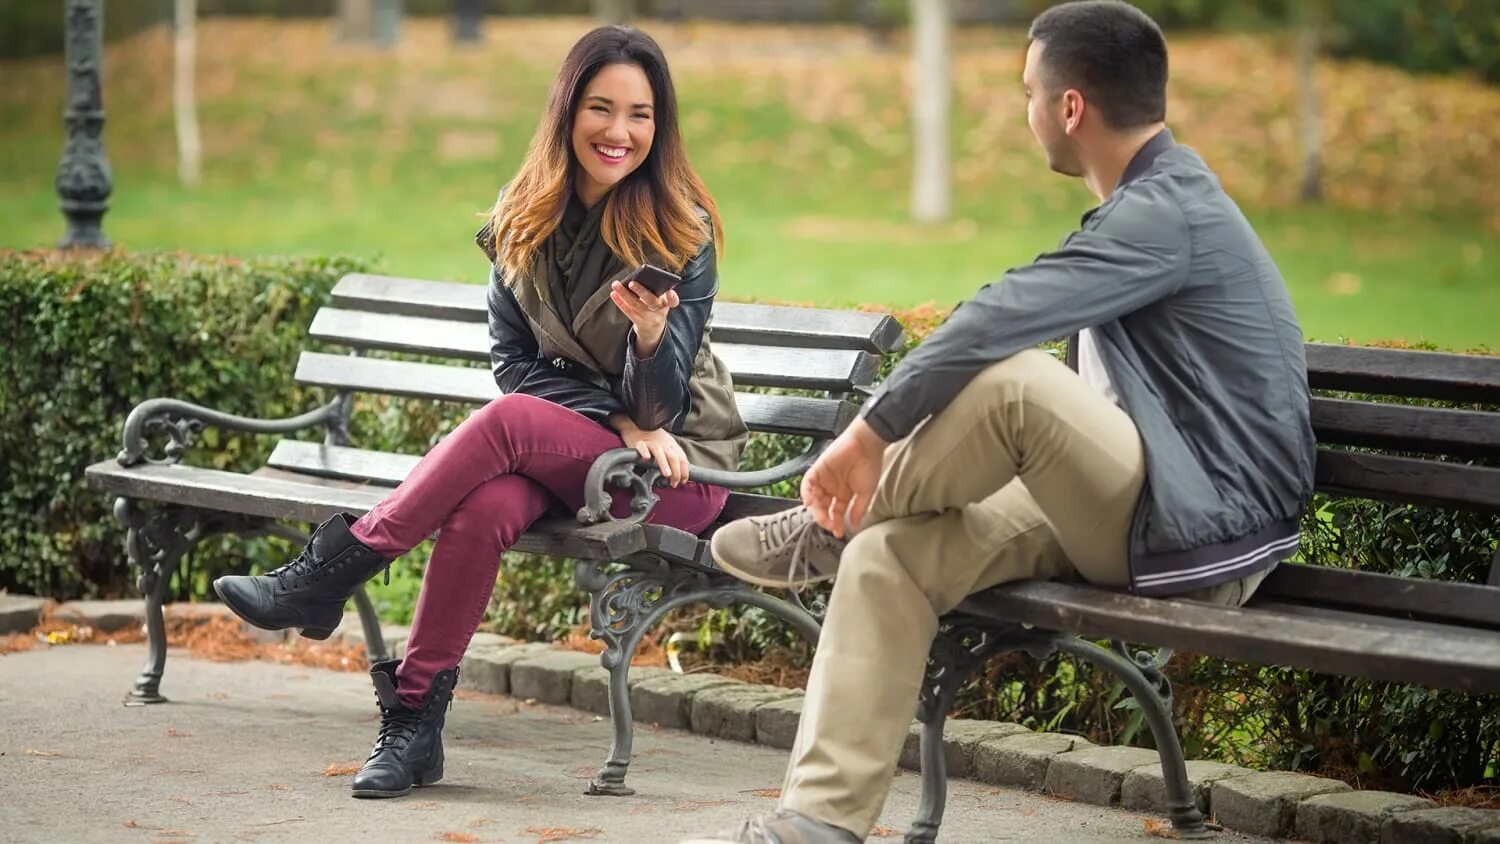 Meet couple. Парень и девушка на лавочке. Мужчина и женщина на скамейке. Пара на скамейке в парке. Парень с девушкой на скамейке.